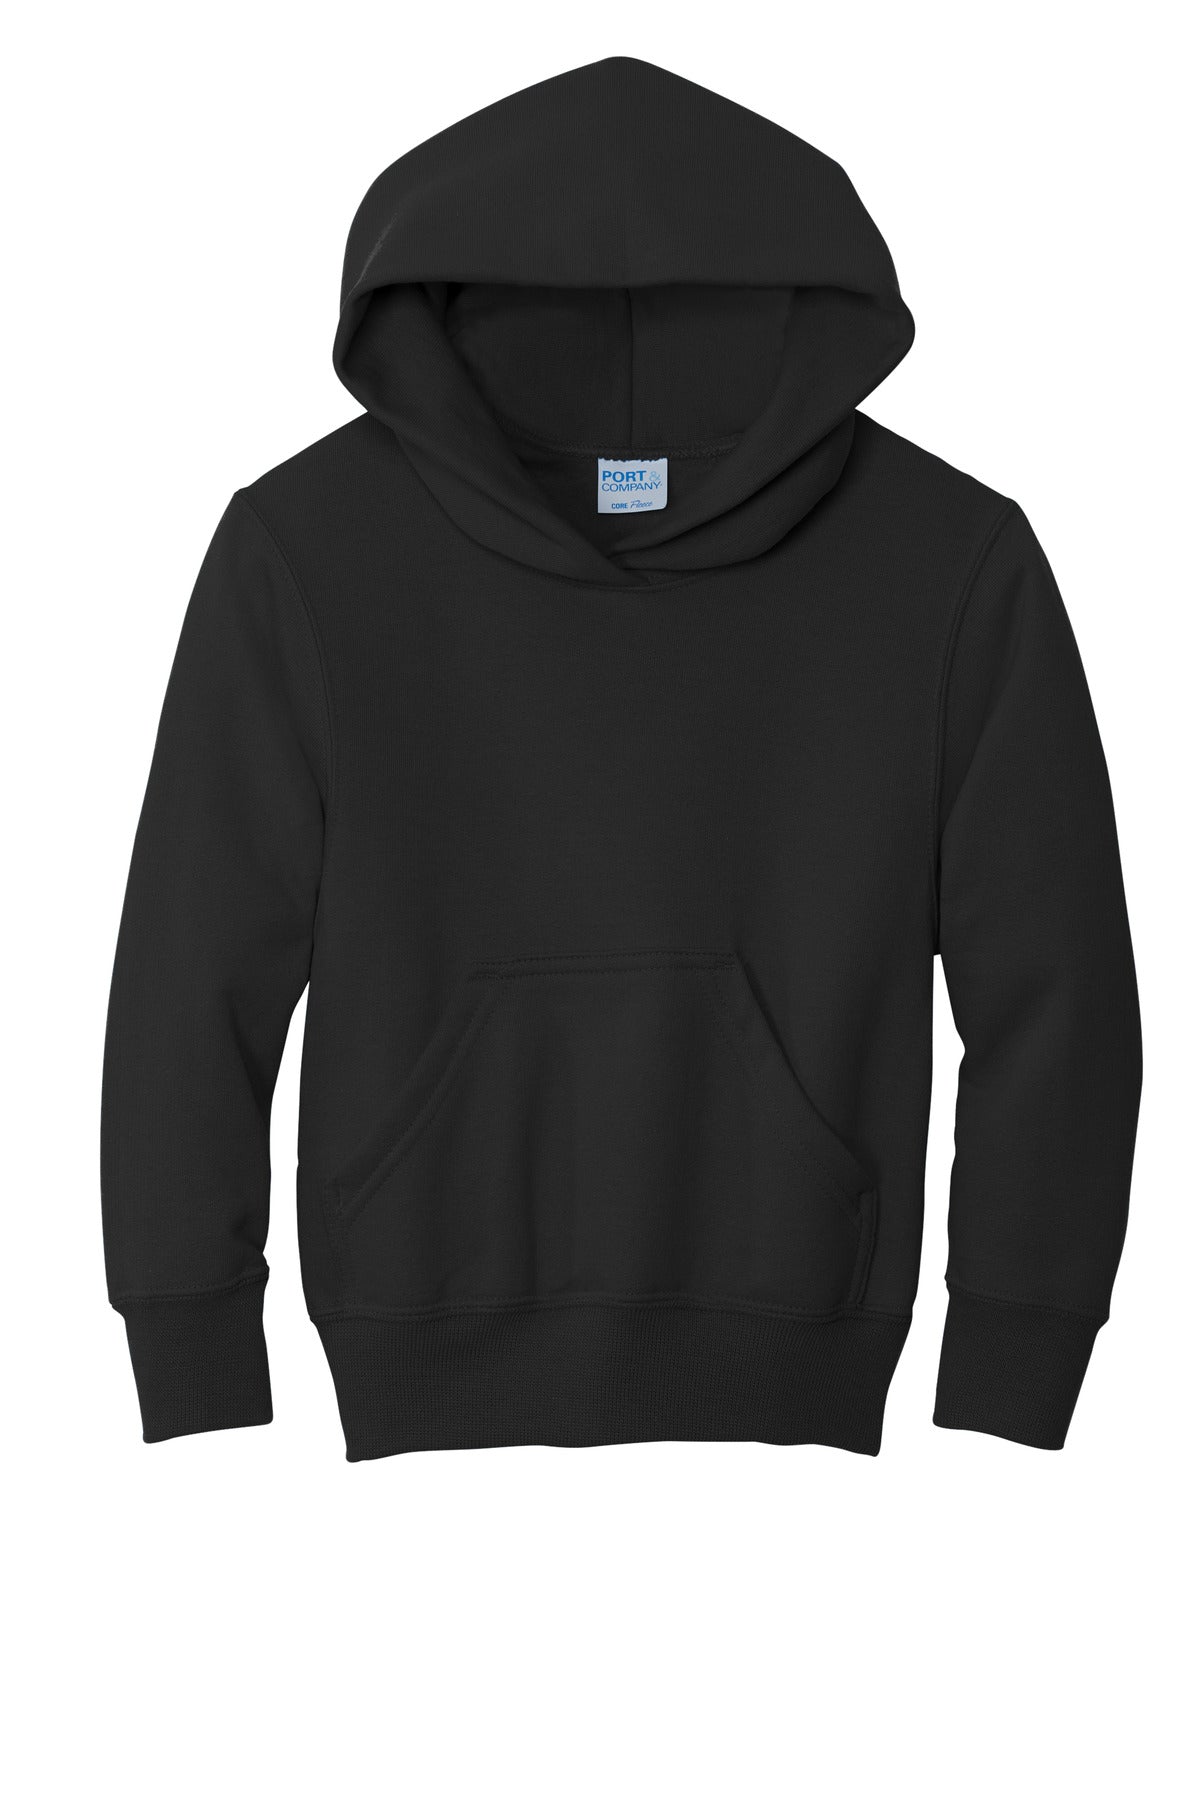 Port & Company - Youth Core Fleece Pullover Hooded Sweatshirt. PC90YH - Jet Black